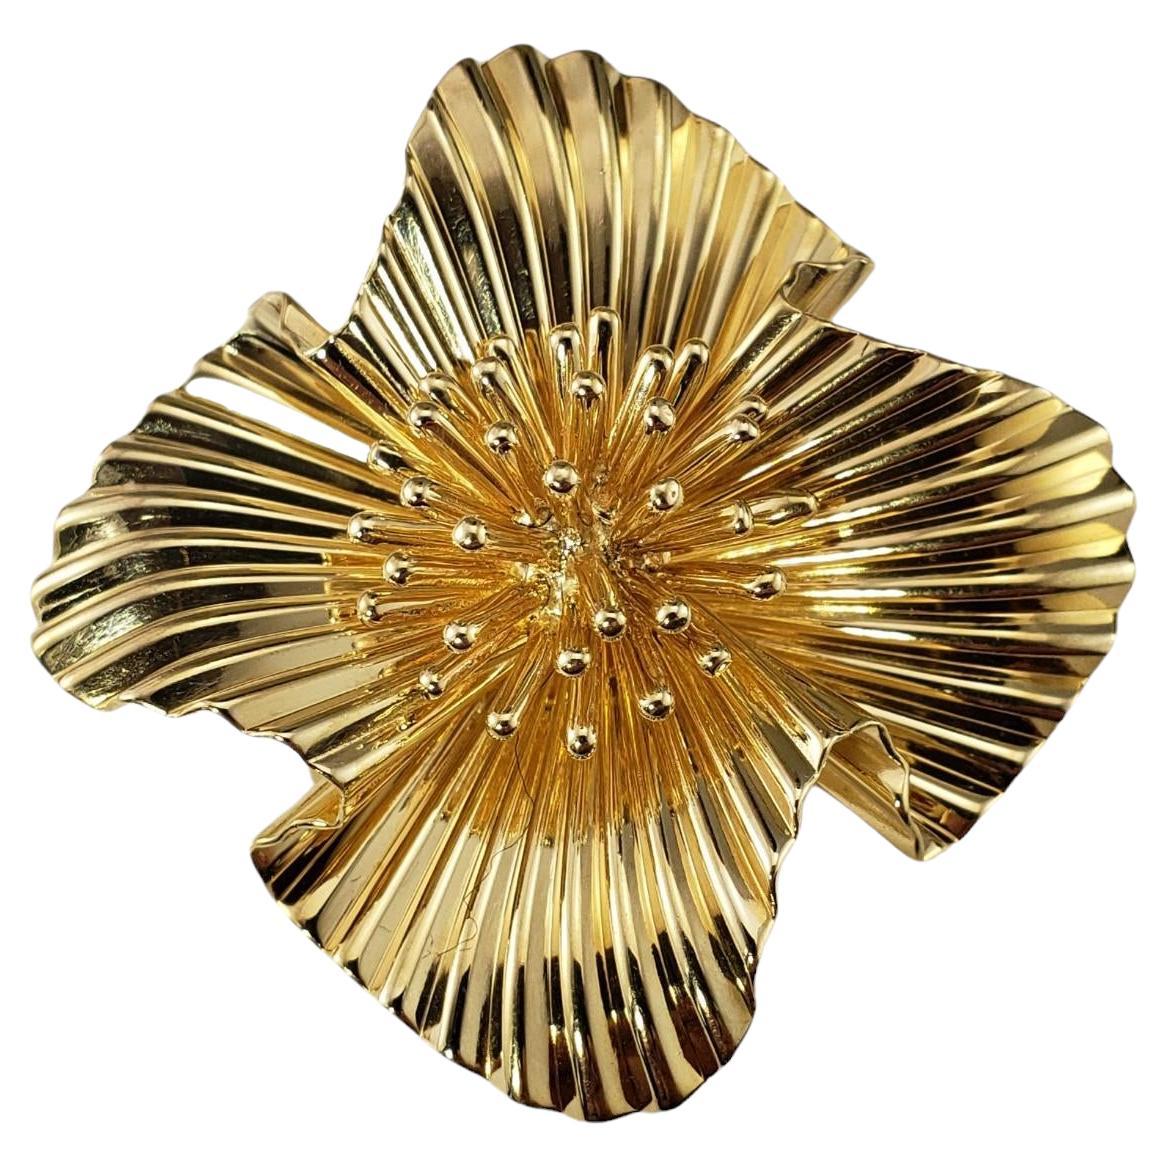 Tiffany & Co. 14 Karat Gelbgold Hundeholz-Blumenbrosche/Pin #17531, Tiffany & Co.